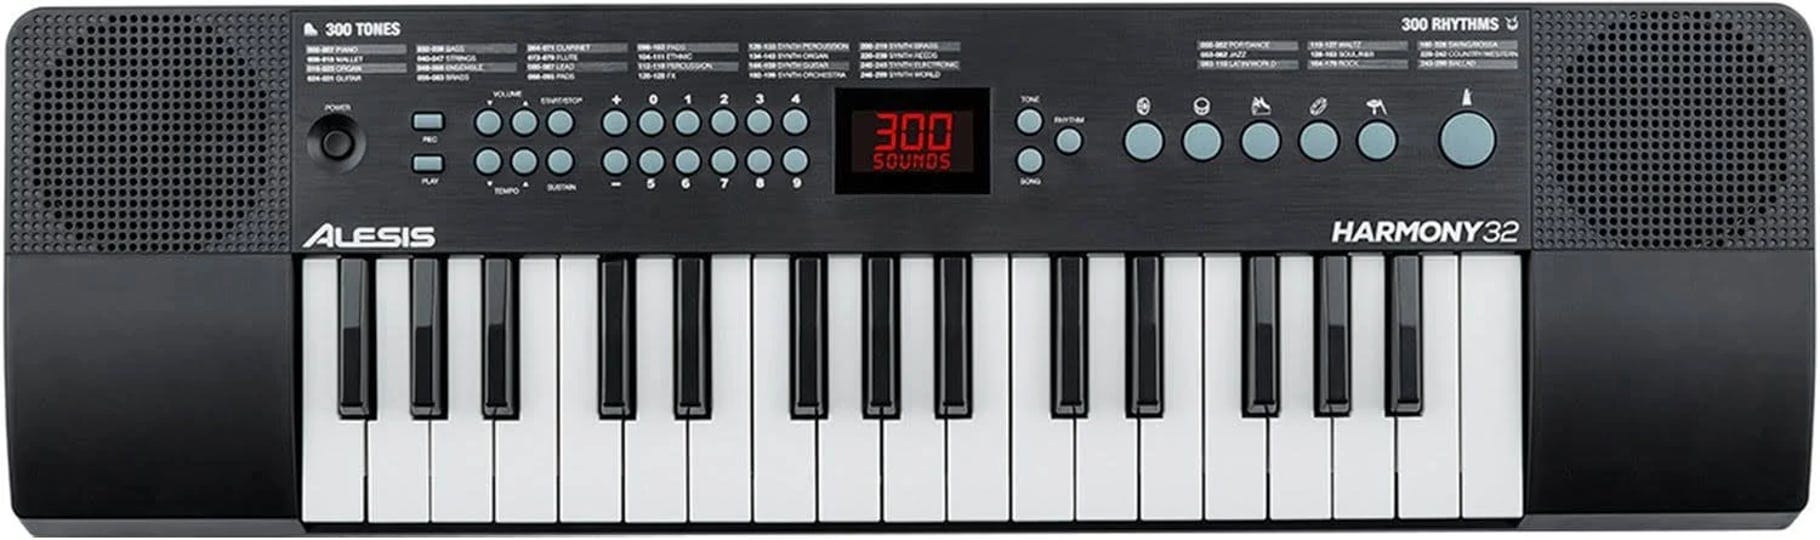 alesis-harmony-32-key-portable-keyboard-with-built-in-speakers-1